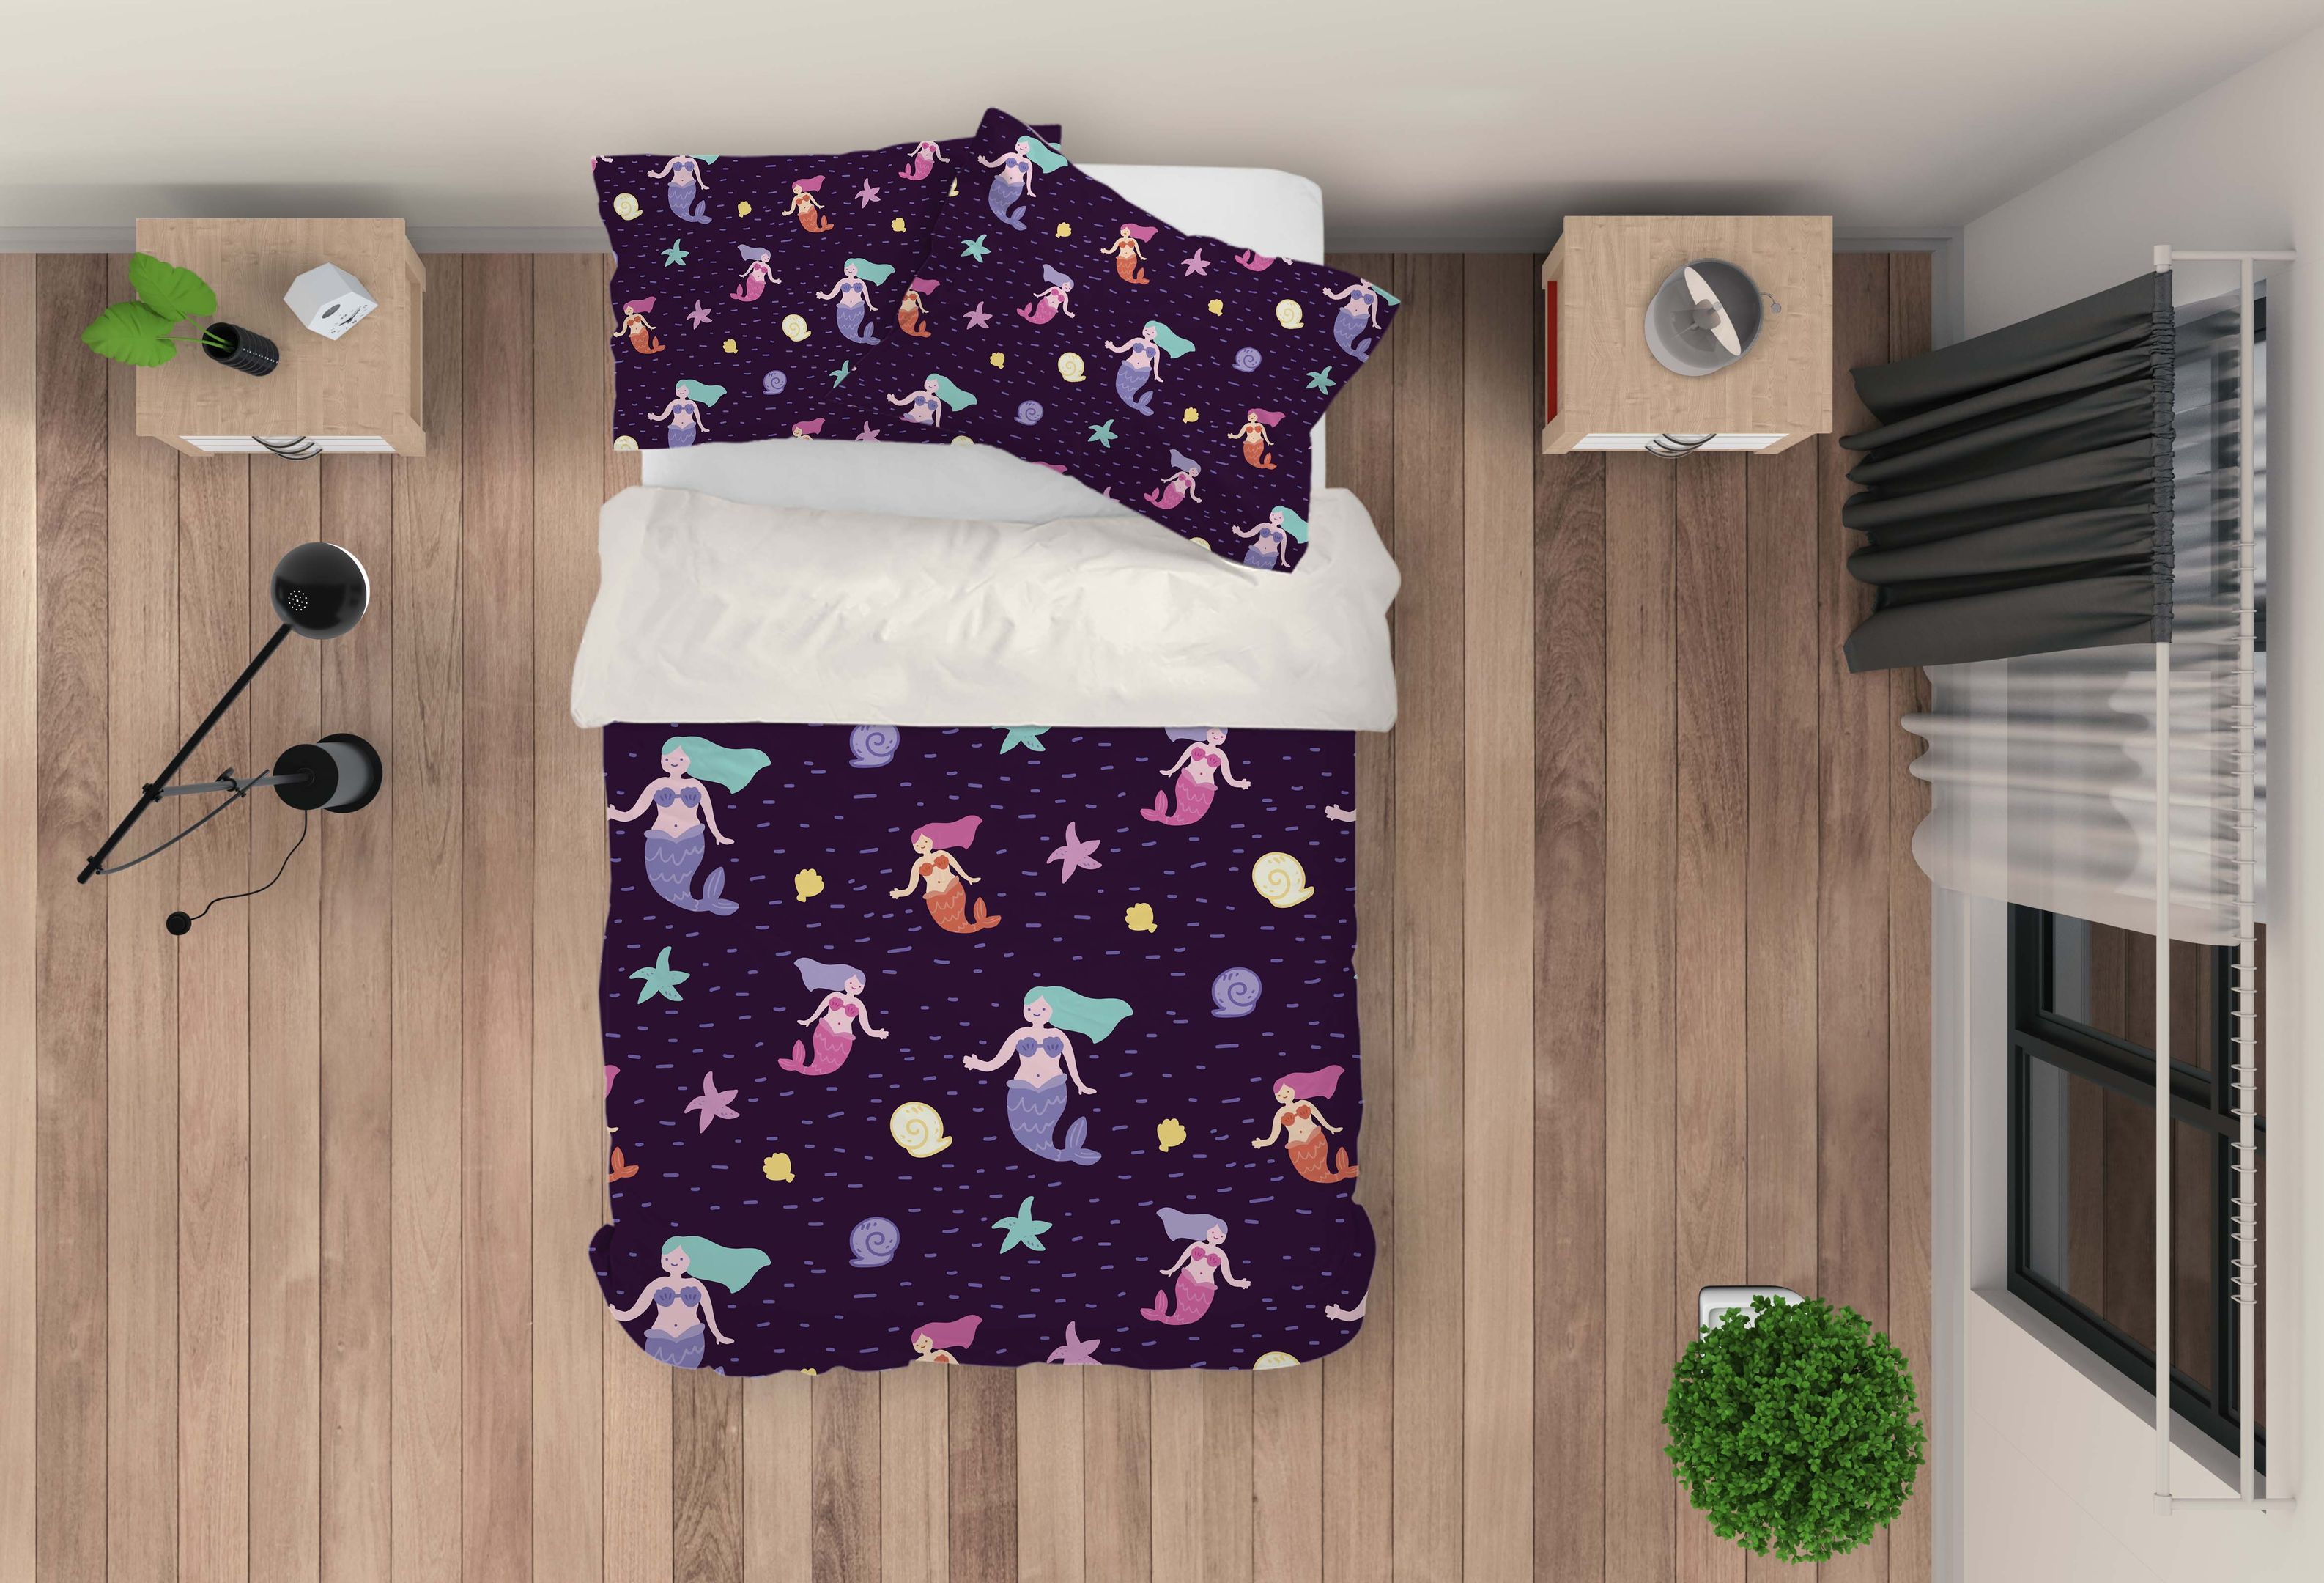 3d cartoon mermaid purple bedding set bedroom decor 6755 scaled